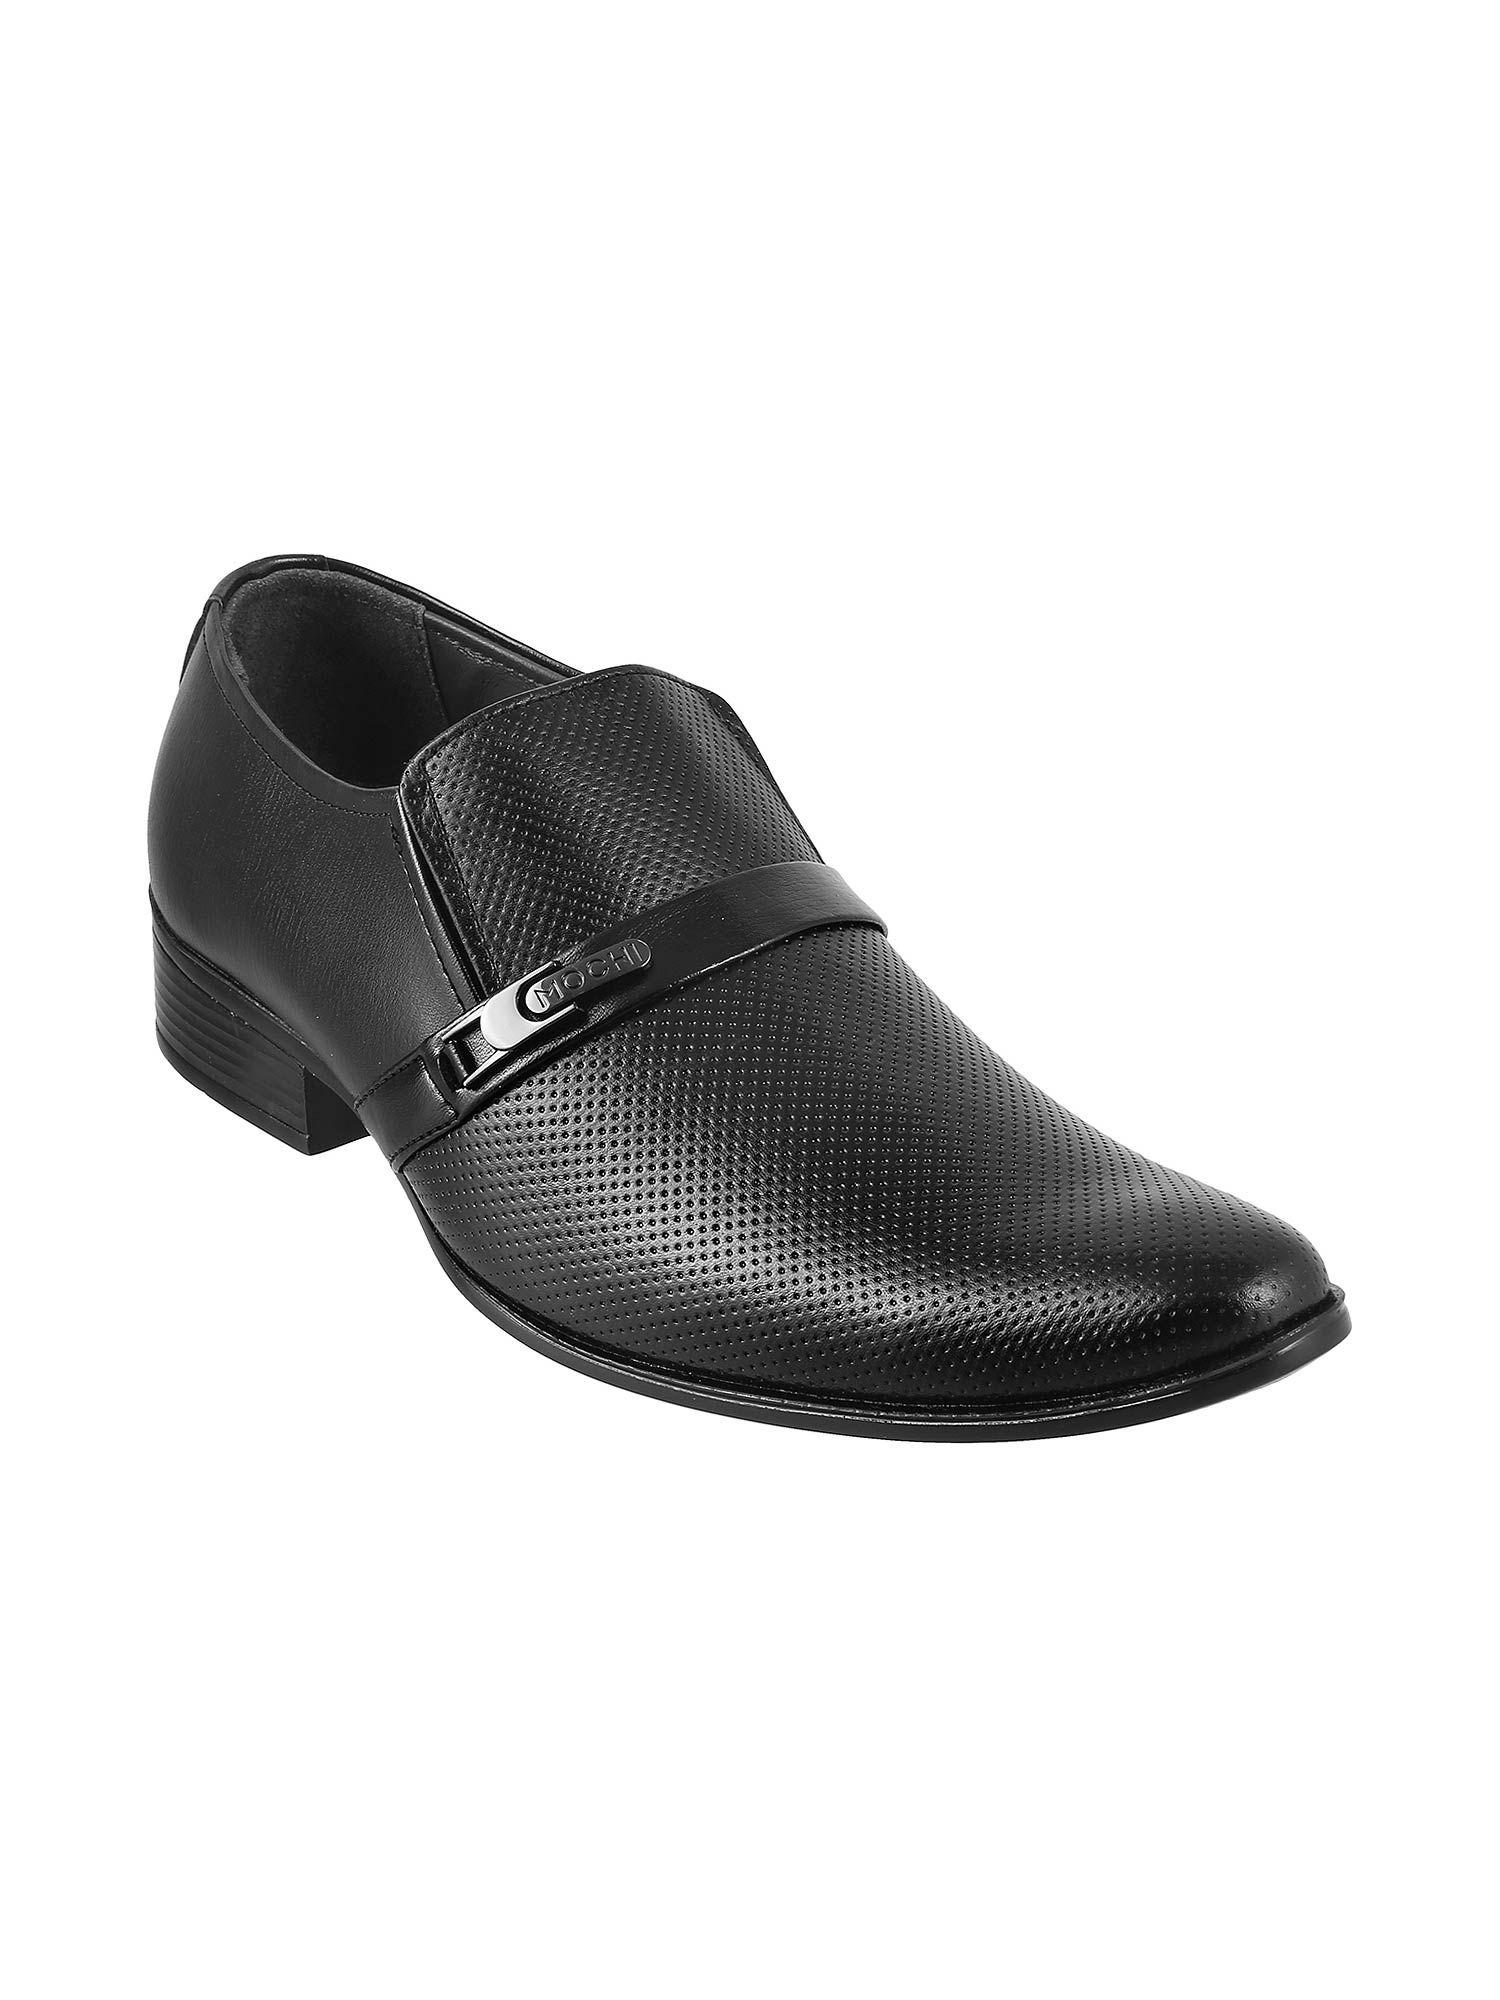 solid-black-slip-on-shoes